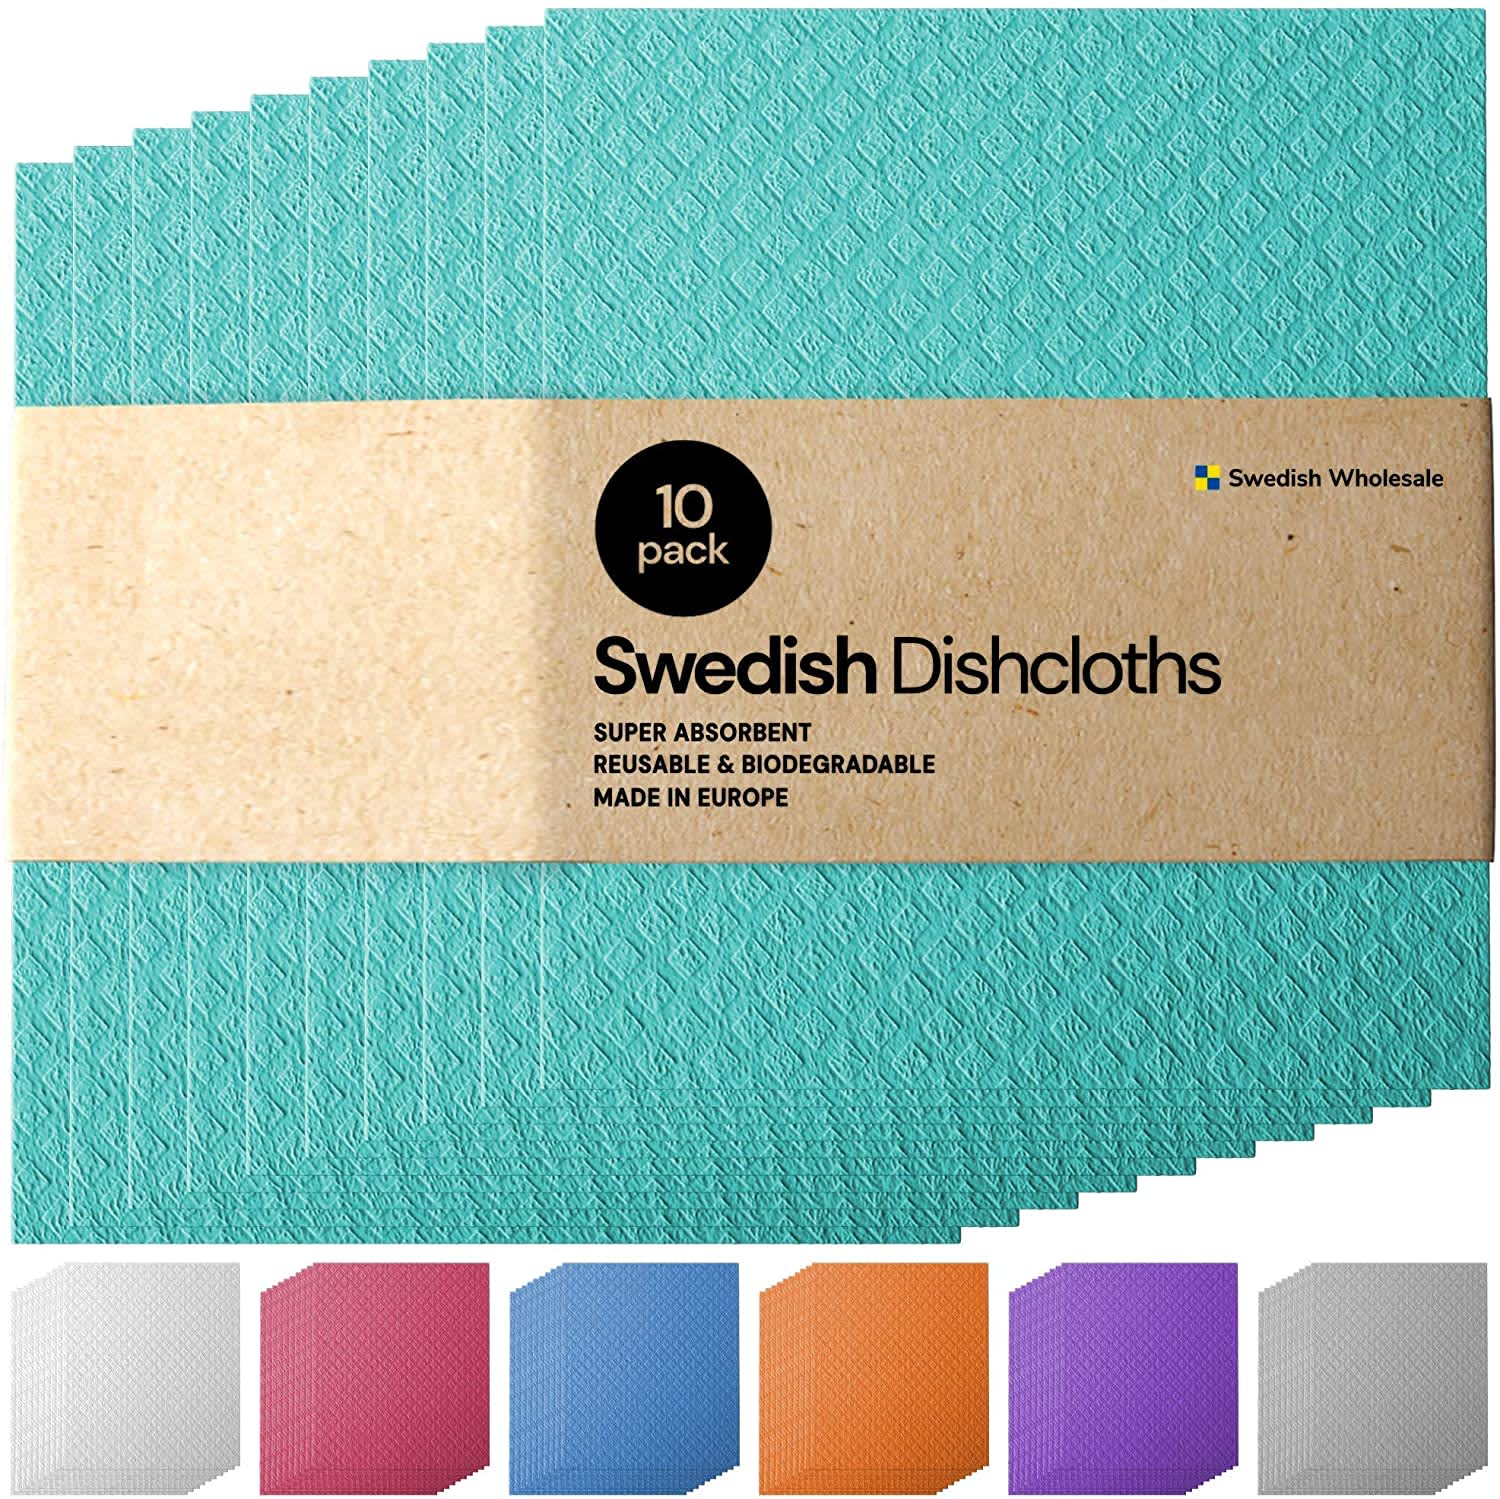 Swedish Wholesale Swedish Dish Cloths for Kitchen- 10 Pack